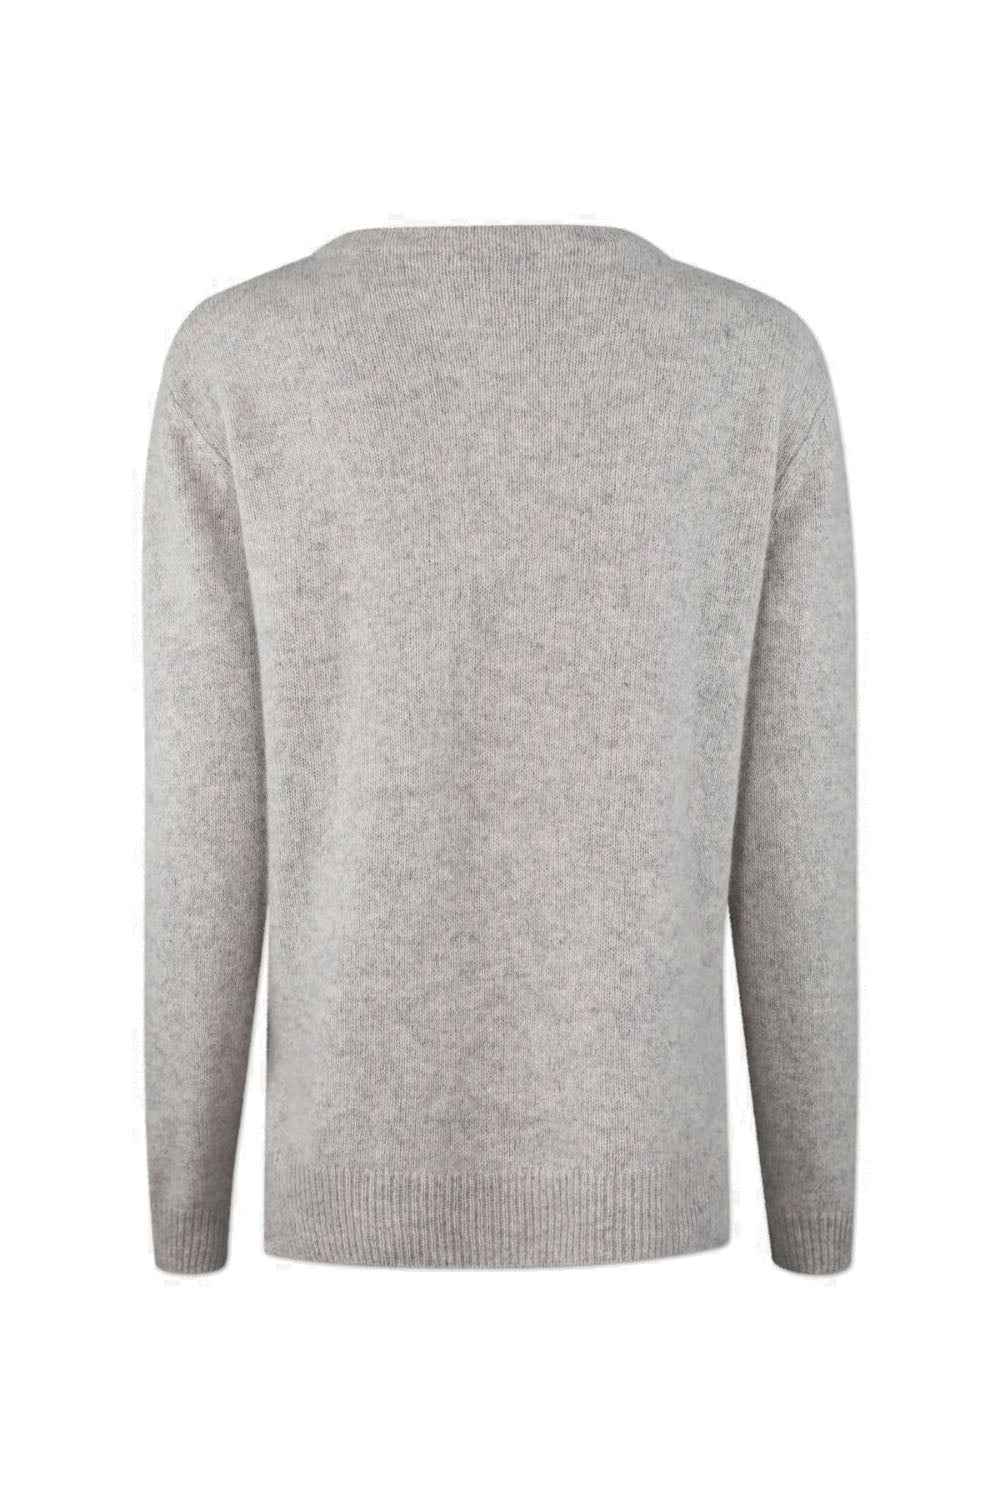 Joie Sweater Grey Melange